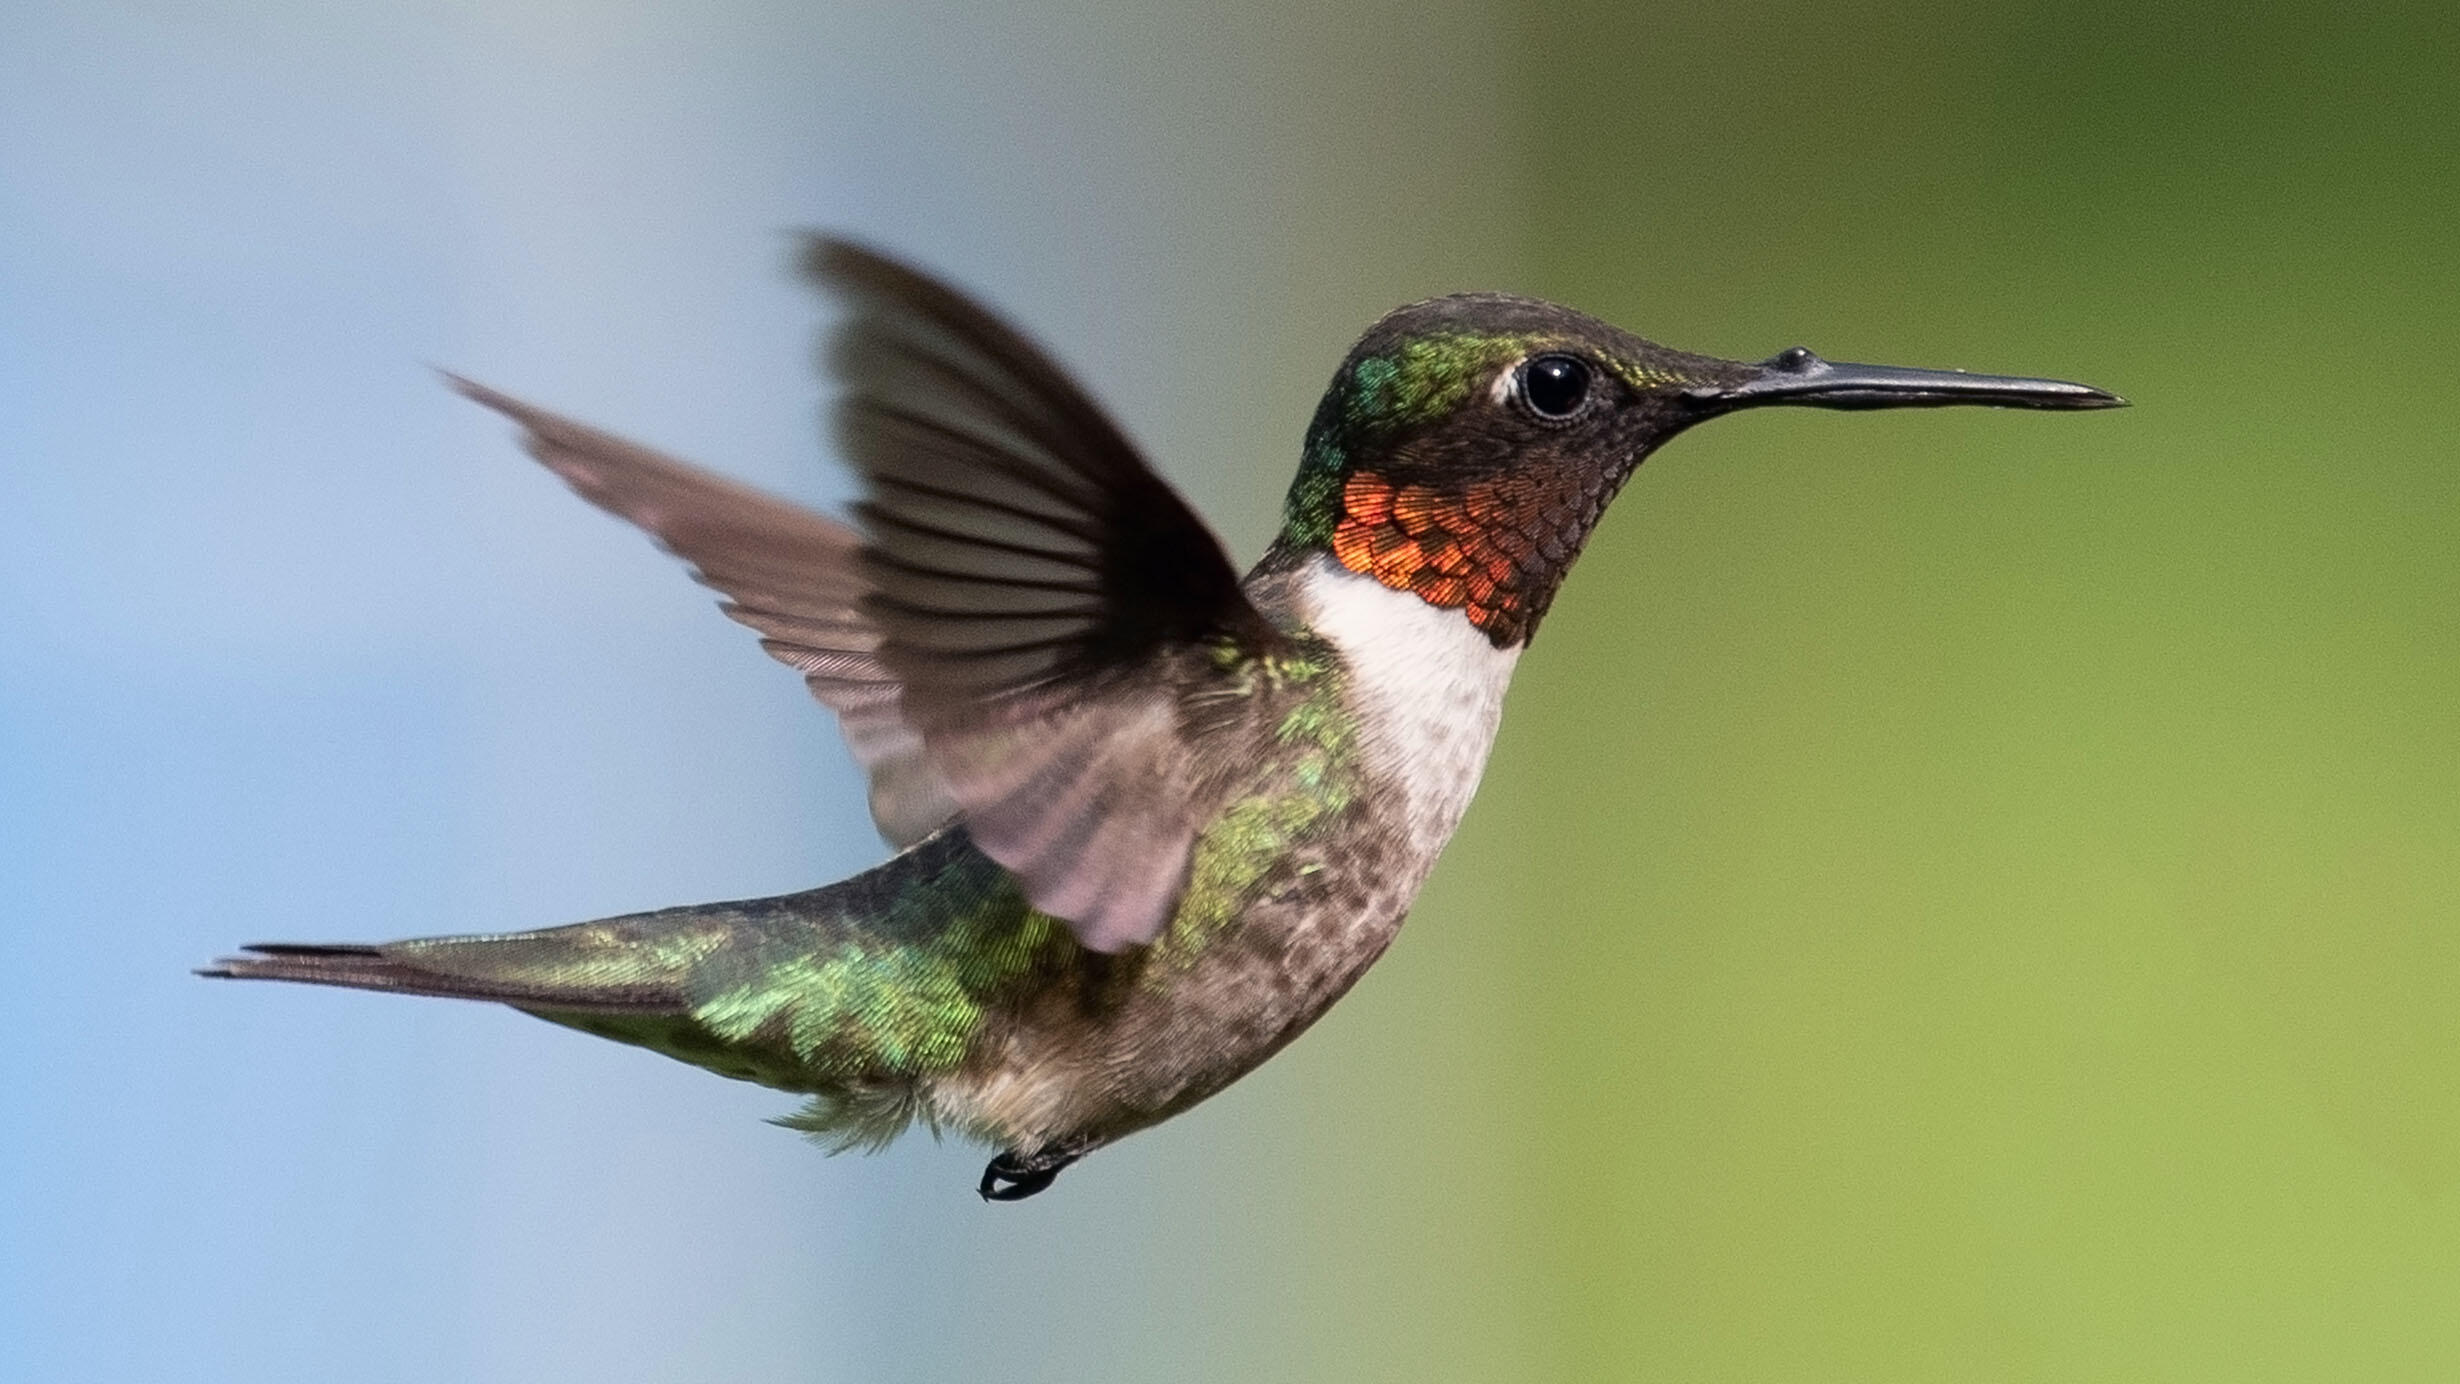 A male Ruby-throated hummingbird flying.